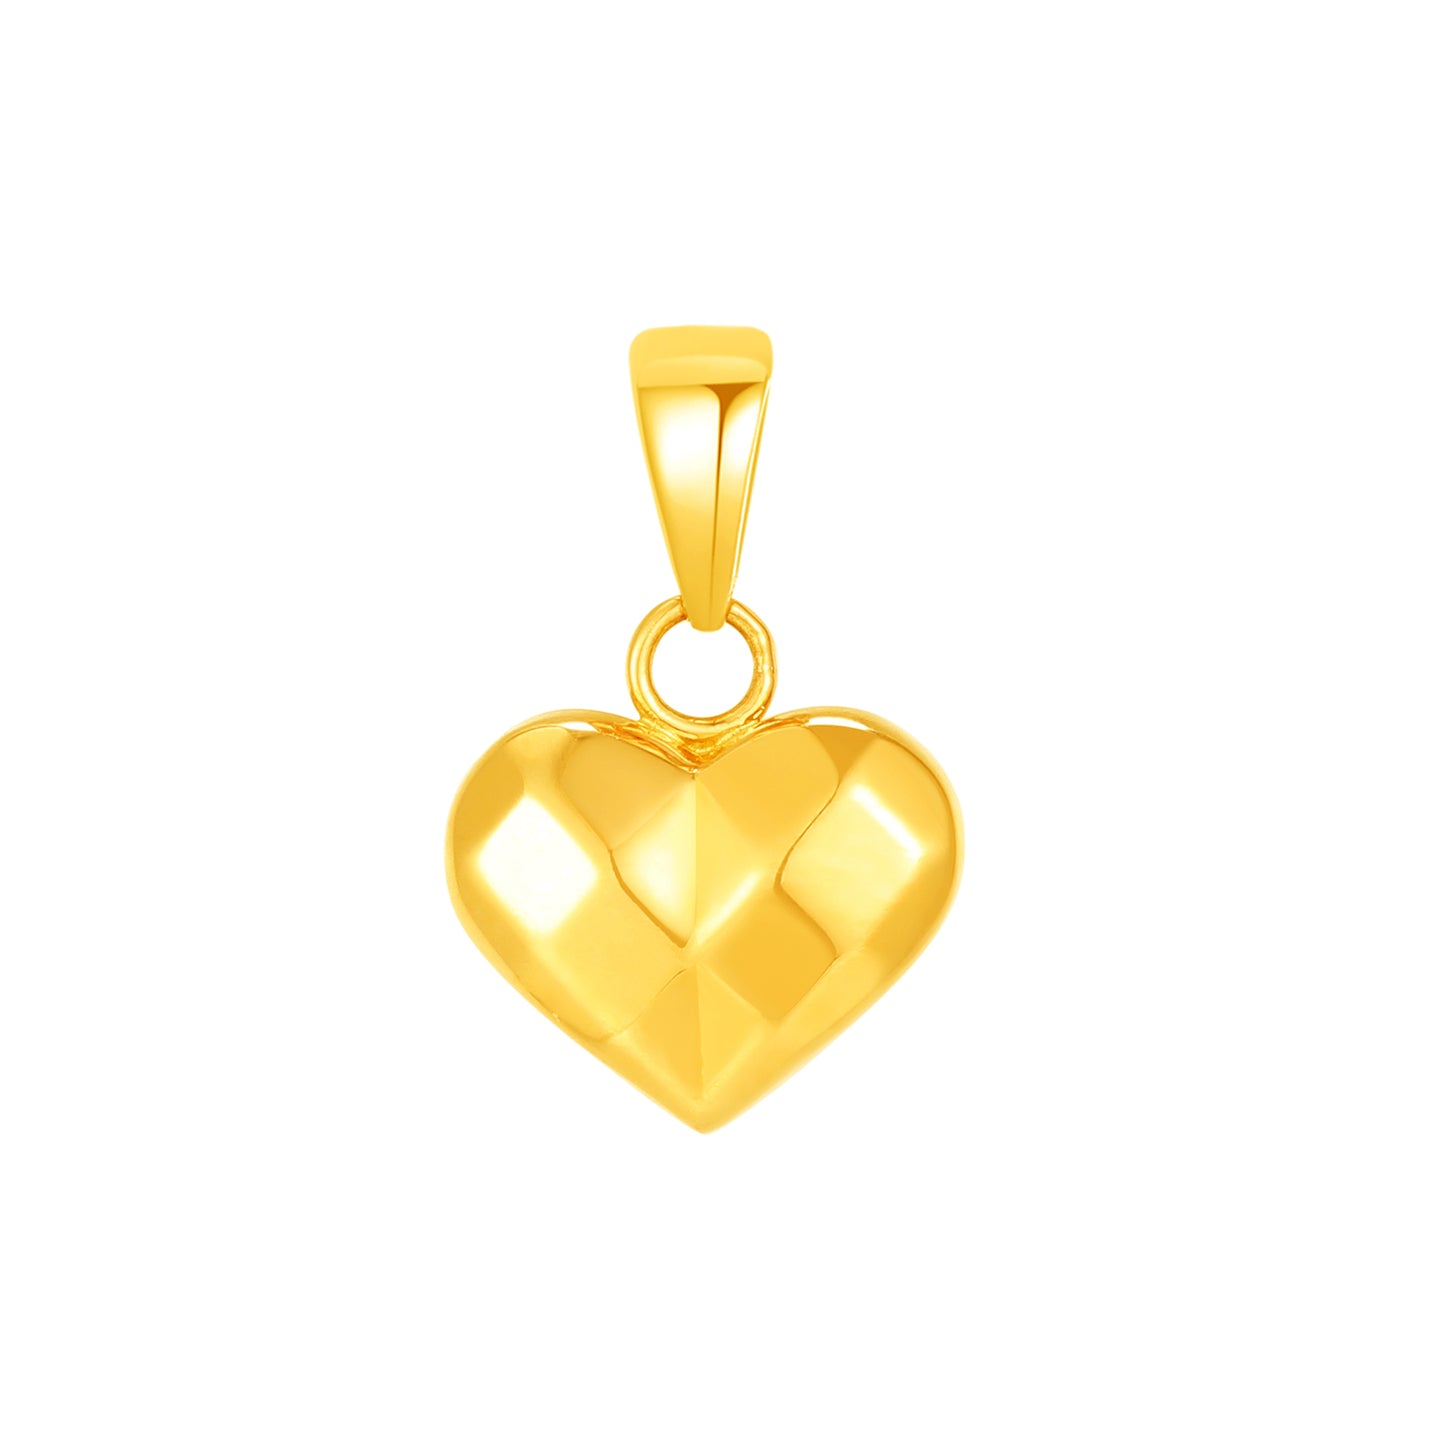 TAKA Jewellery Dolce 18K Gold Pendant Heart